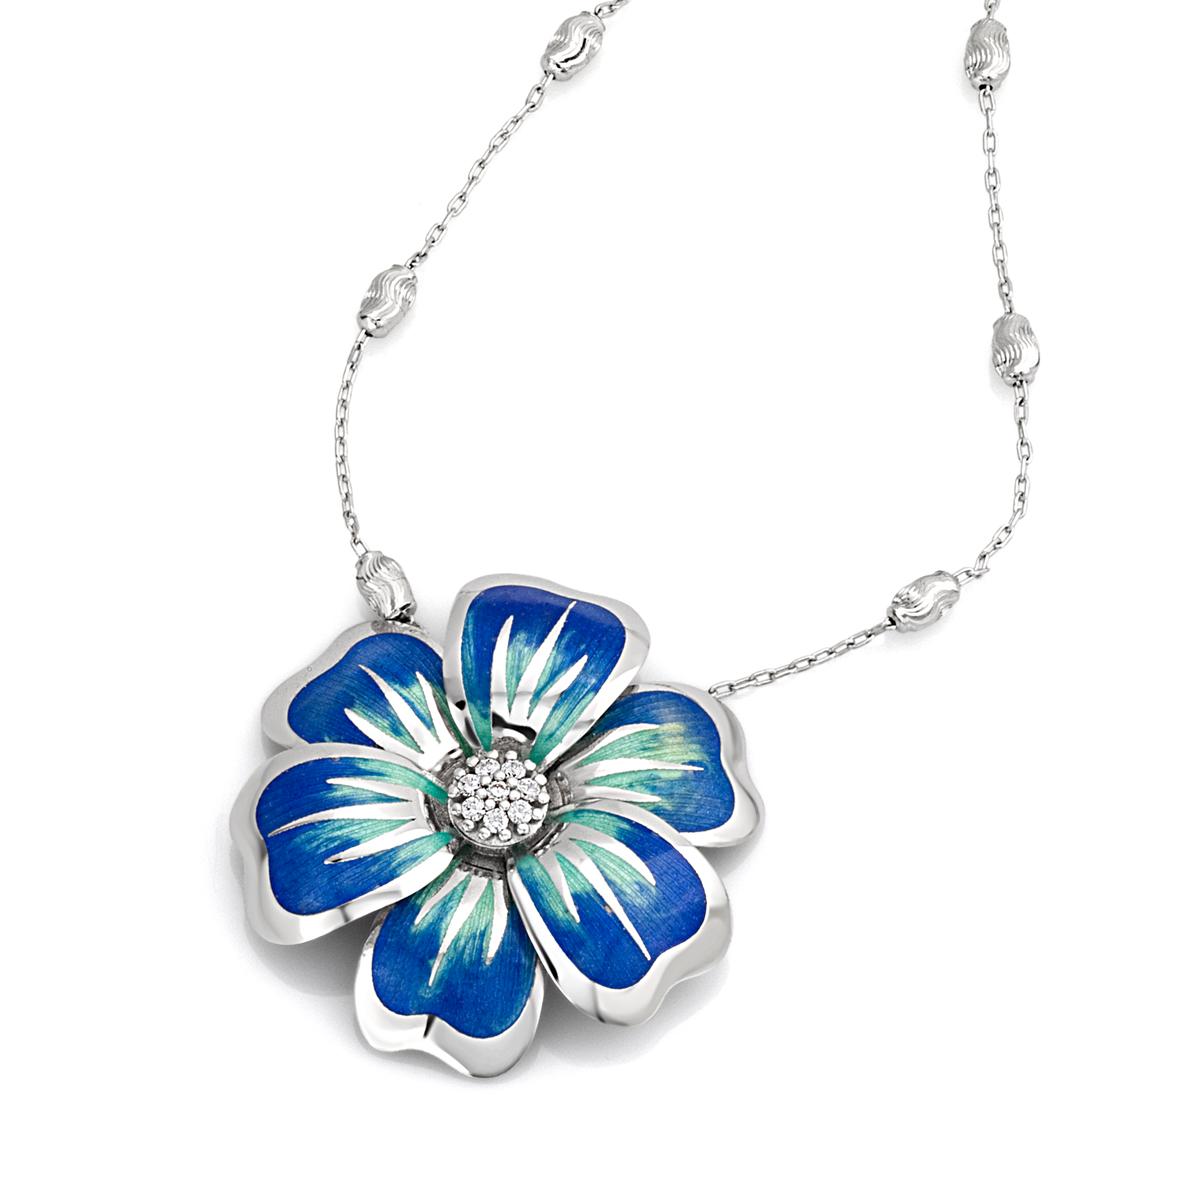 Silver enameled flower necklace